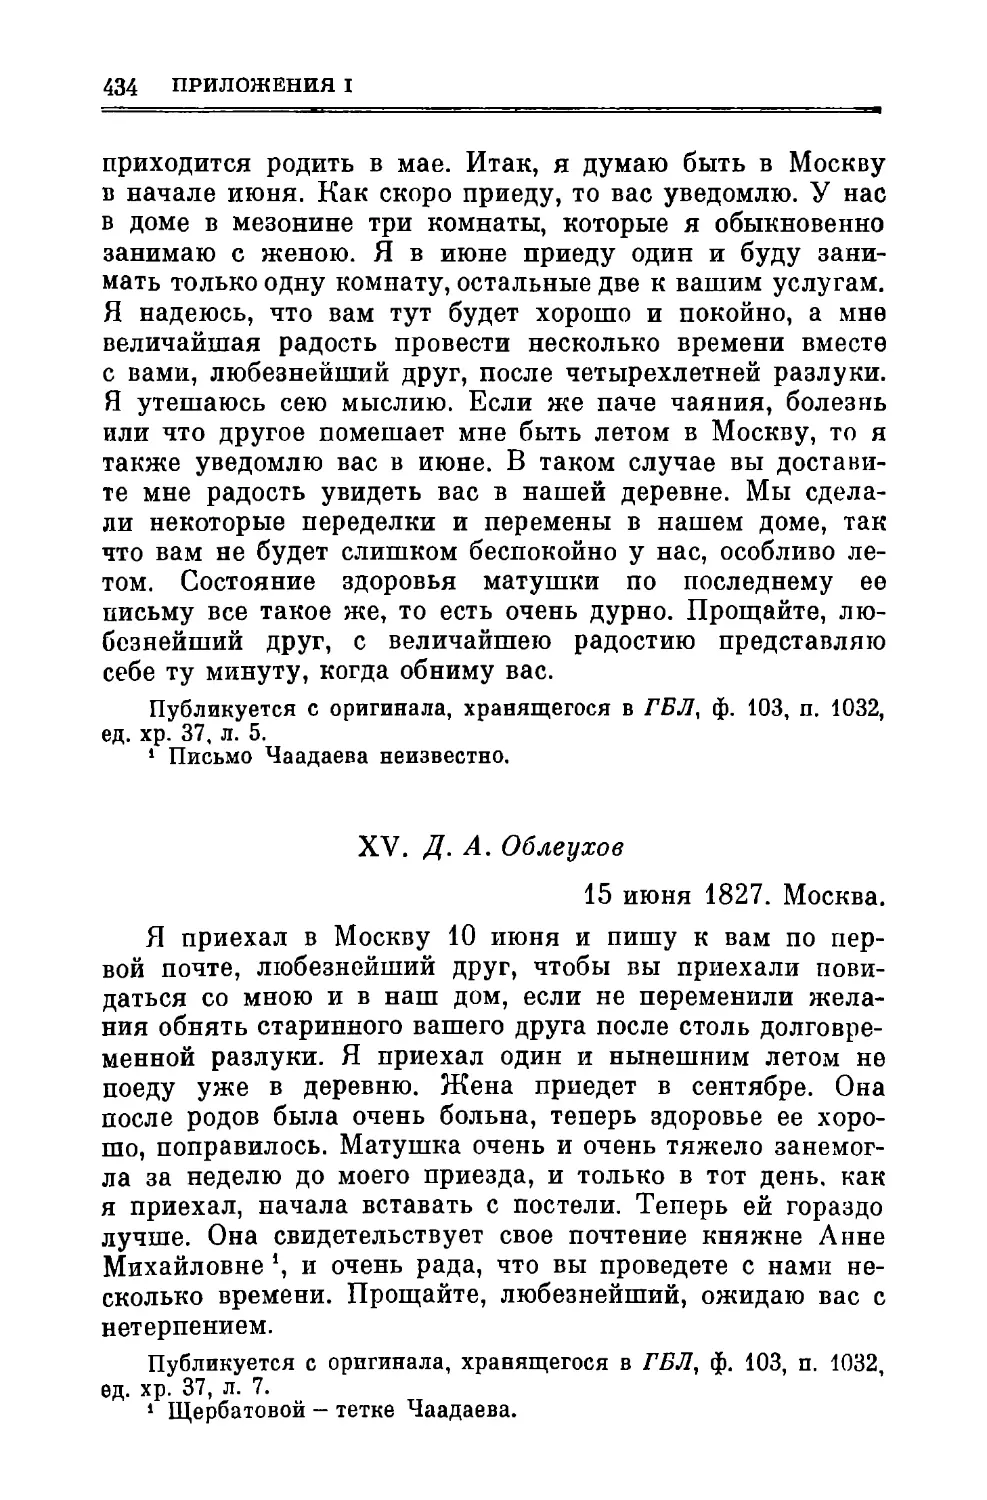 XV. Облеухов Д.А. 15.VI.1827